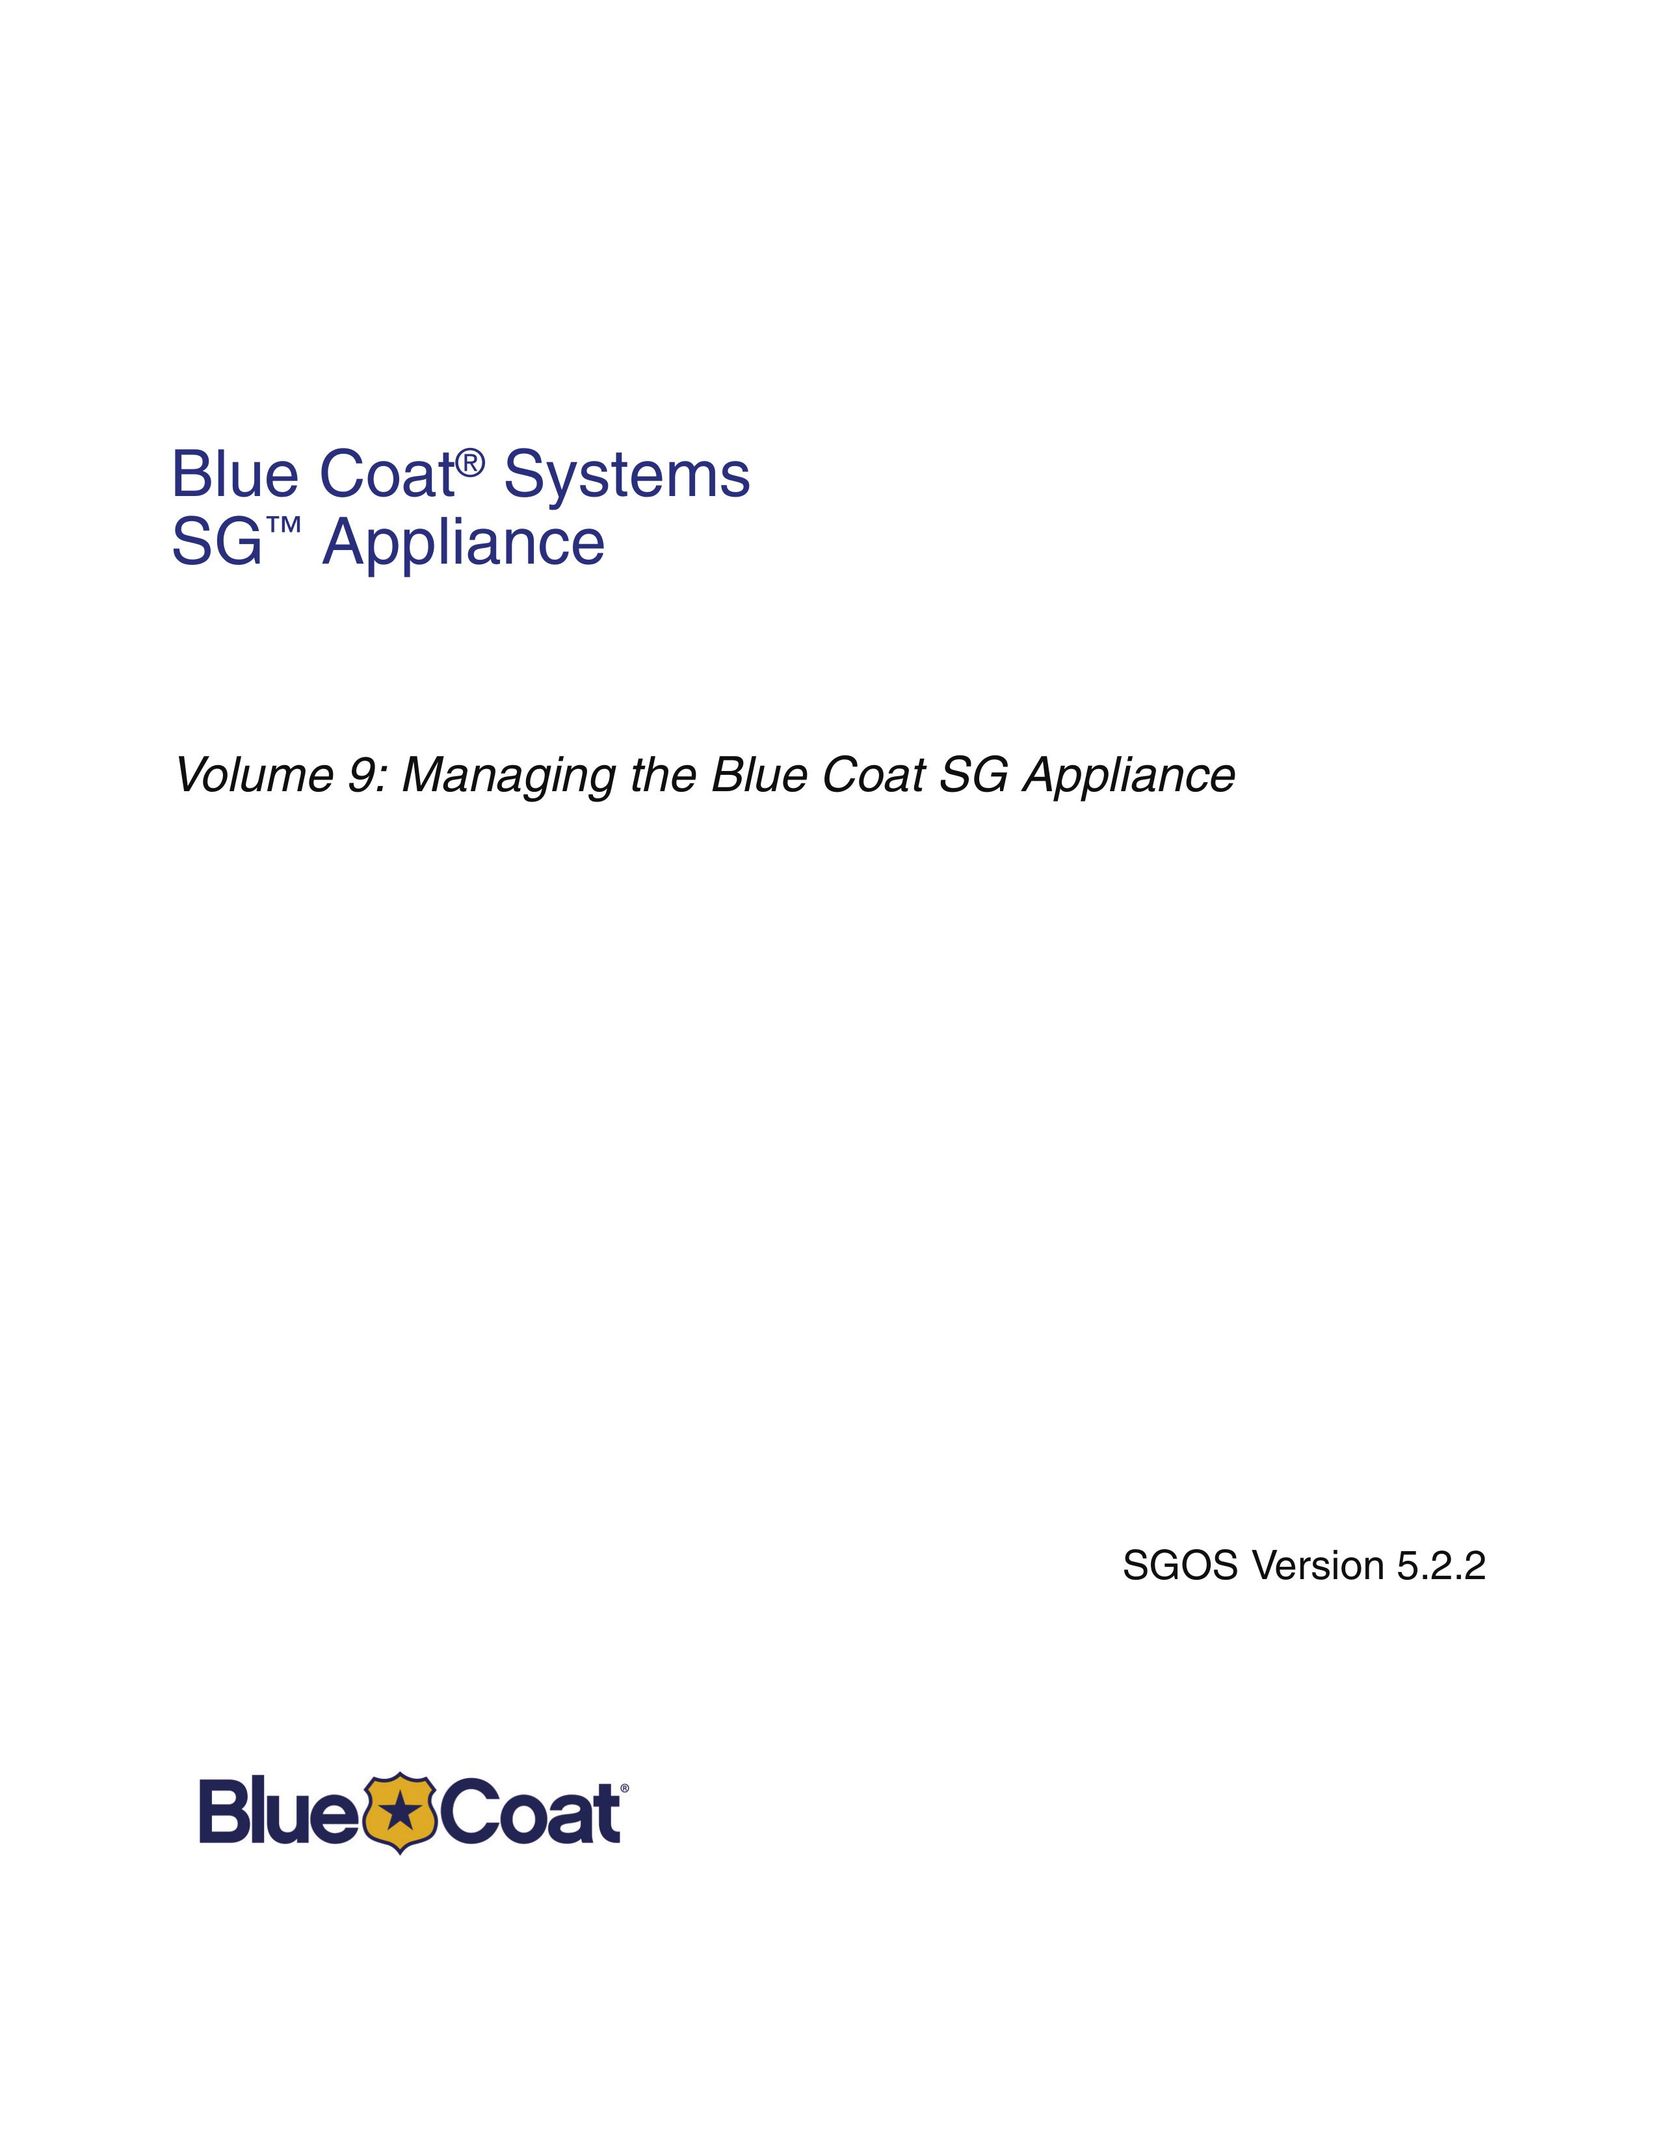 Blue Coat Systems SGOS Version 5.2.2 Appliance Trim Kit User Manual